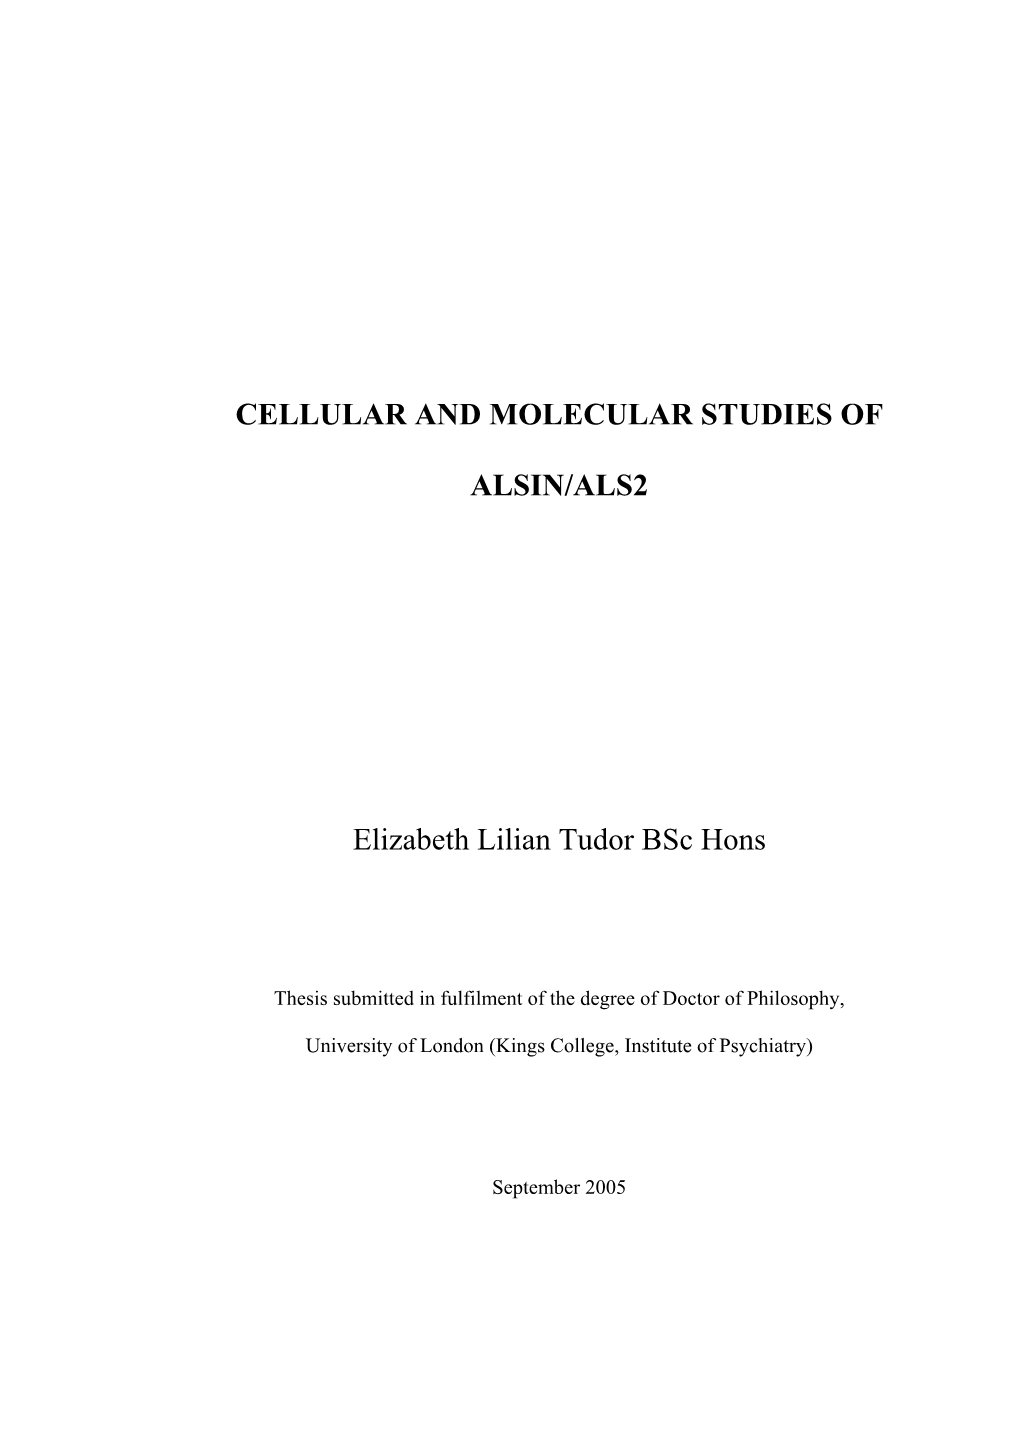 Cellular and Molecular Studies of ALSIN